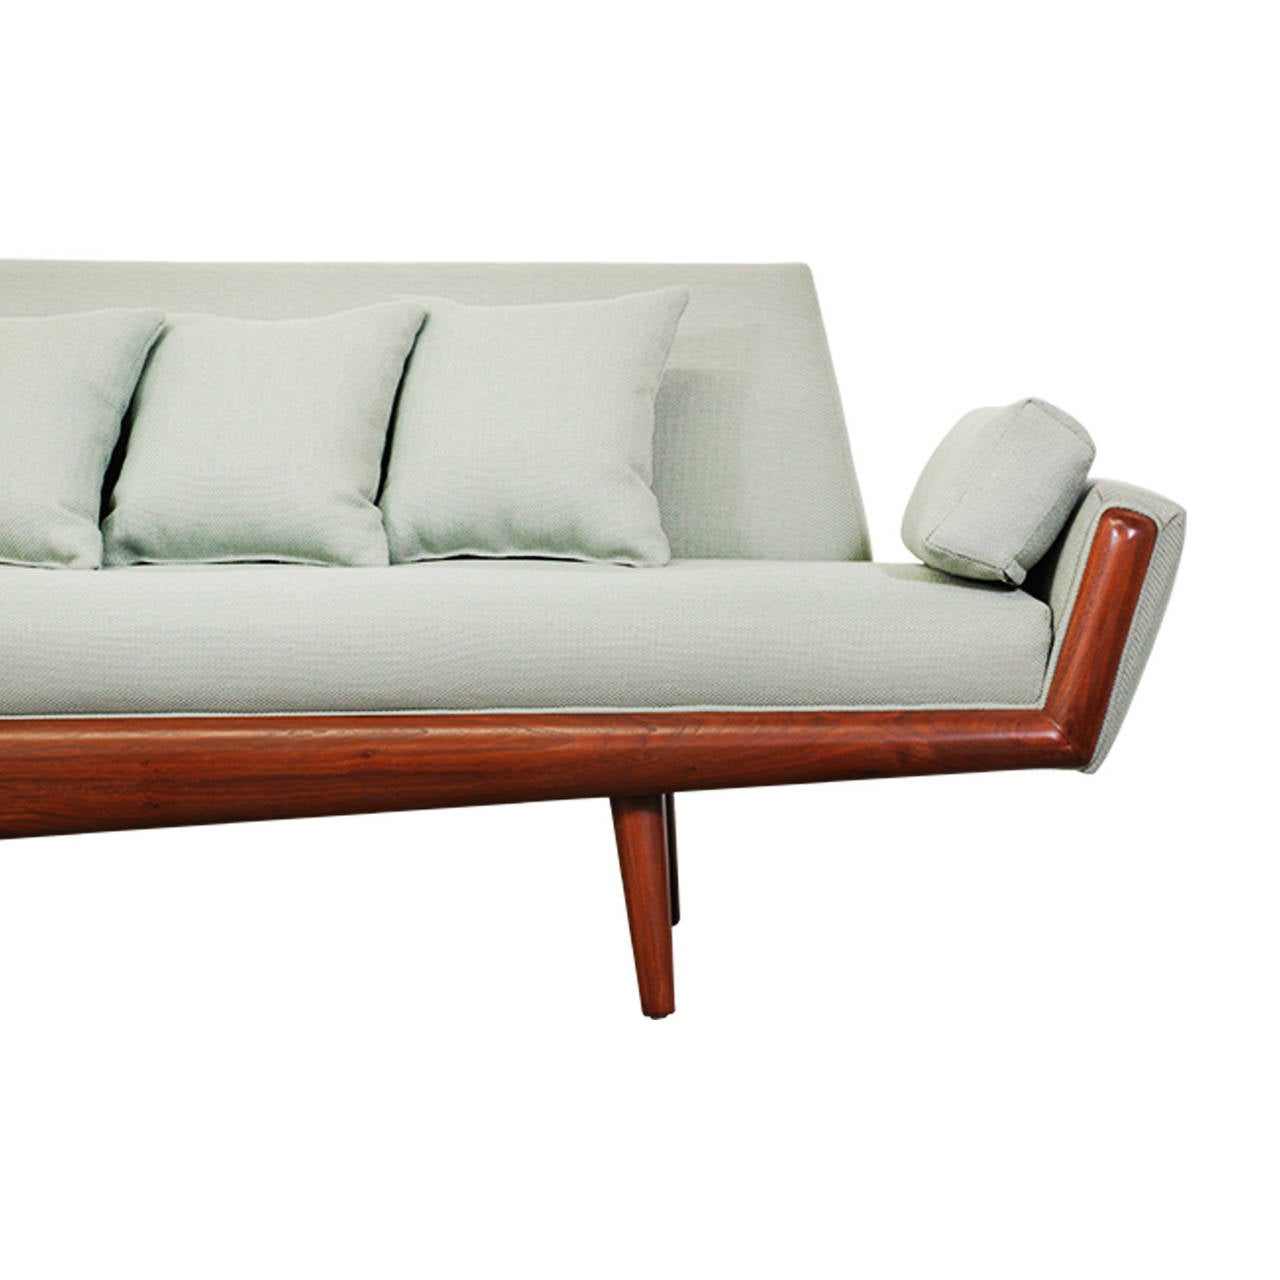 Mid-20th Century Adrian Pearsall Sofa for Craft Associates